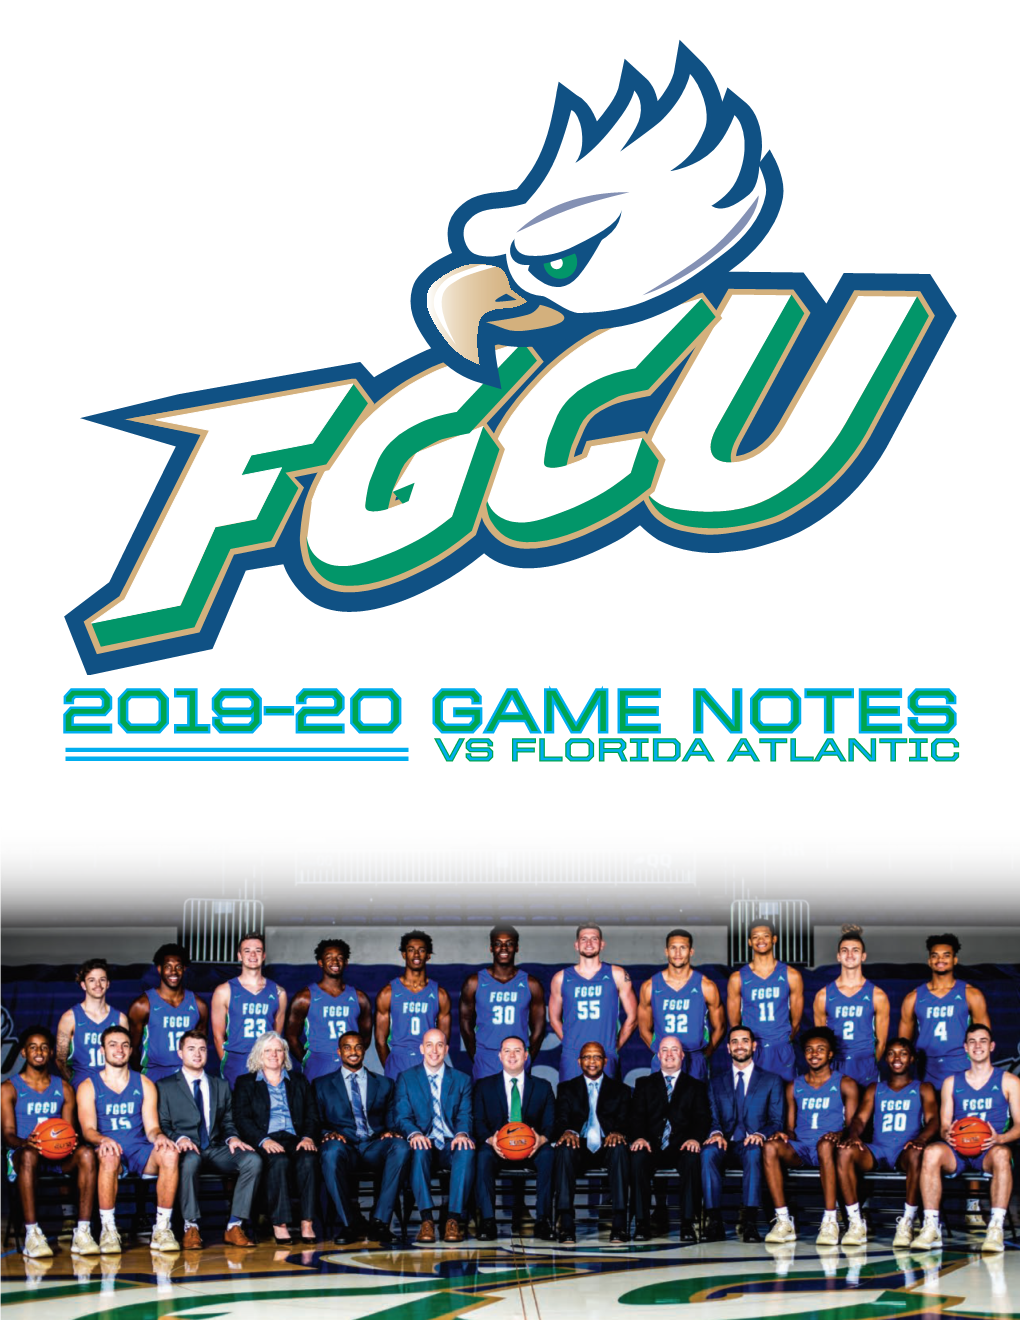 2019-20 Game Notes Vs Florida Atlantic